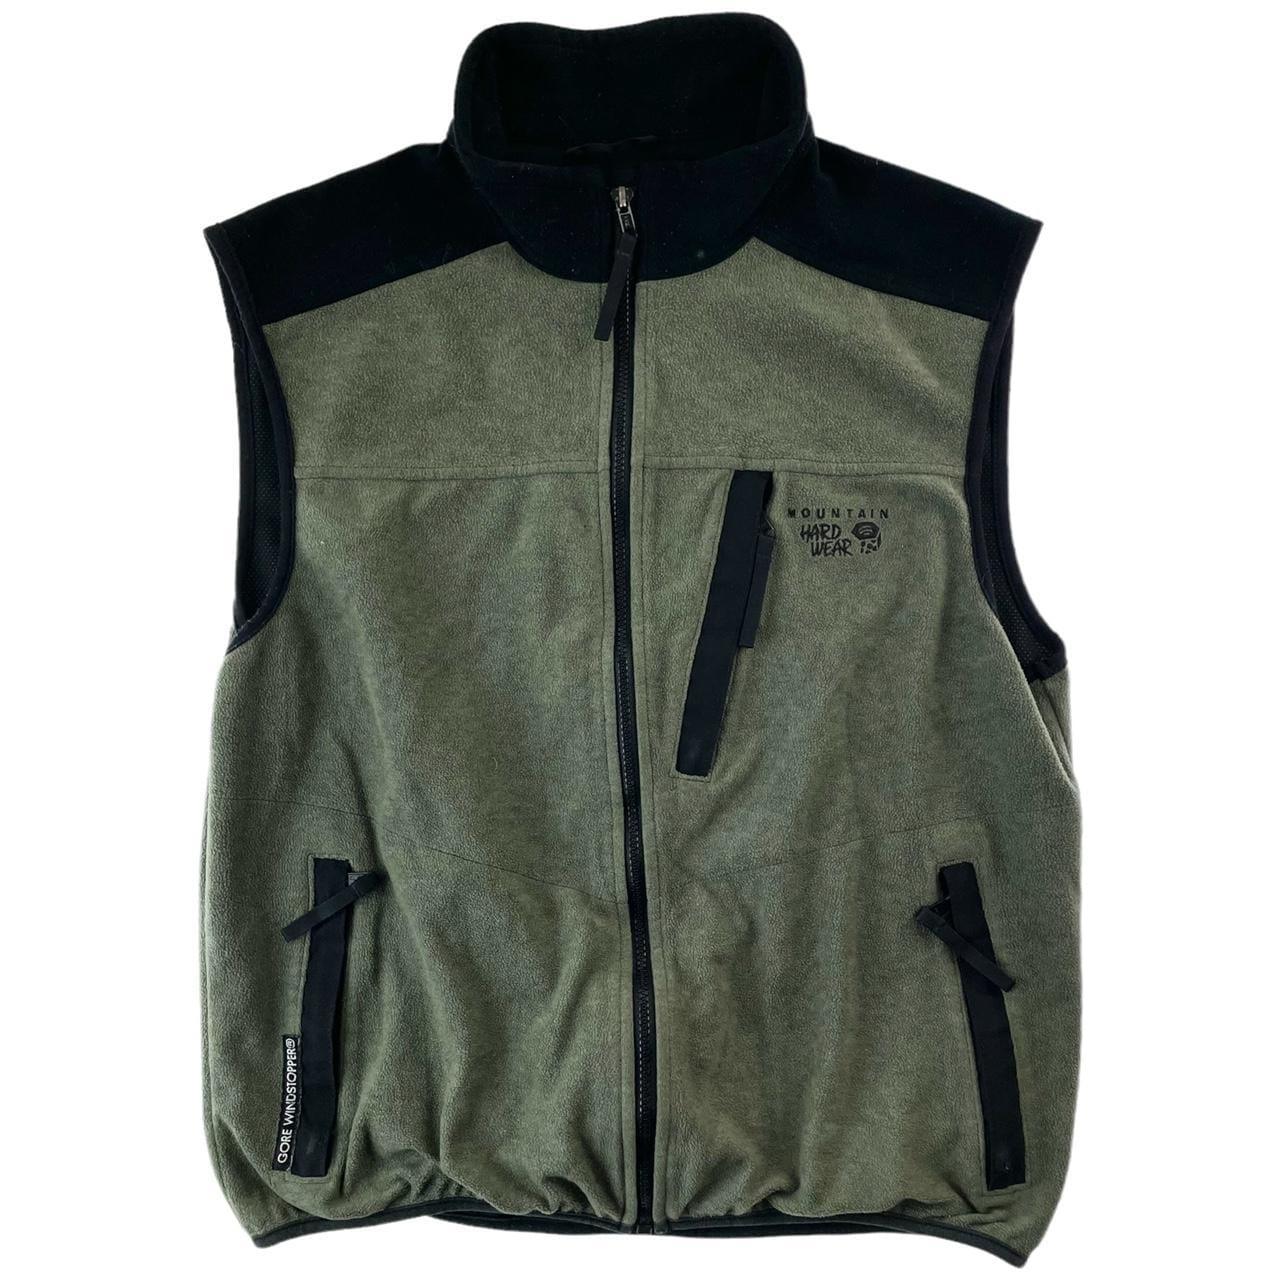 Vintage Mountain Hardware fleece vest size S - Known Source